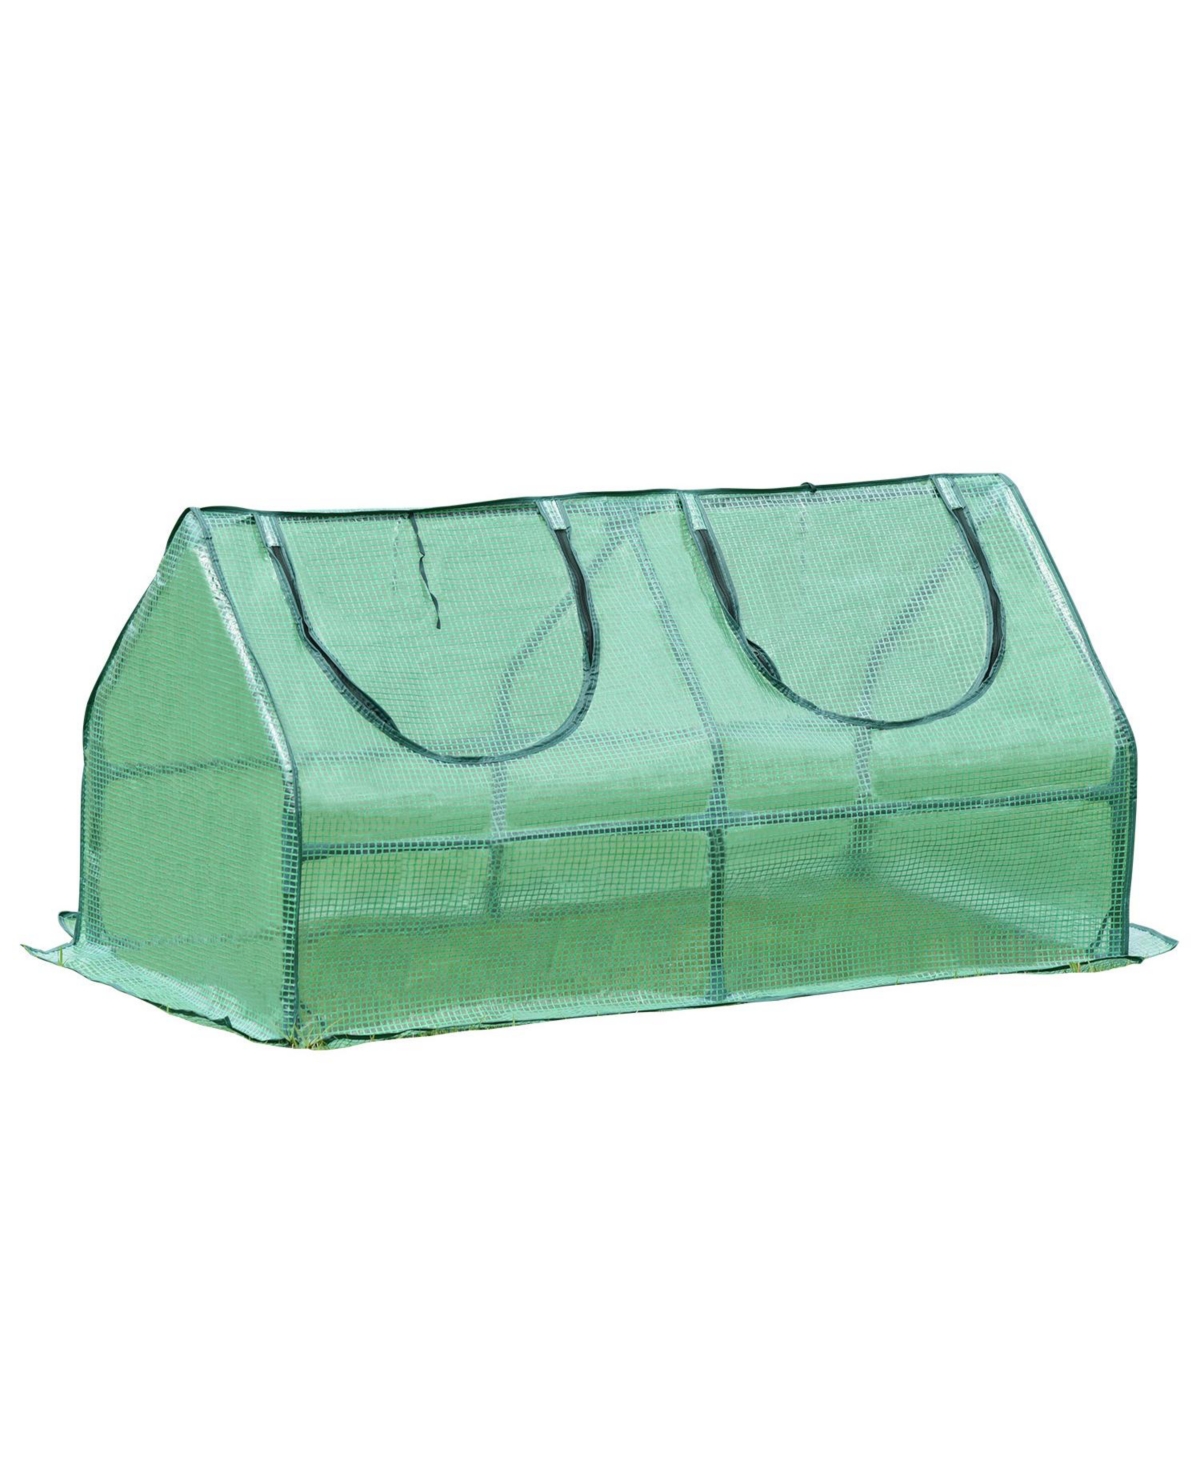 Mini Greenhouse Water Resistant Uv Protected 2 Zipper Doors. - Green